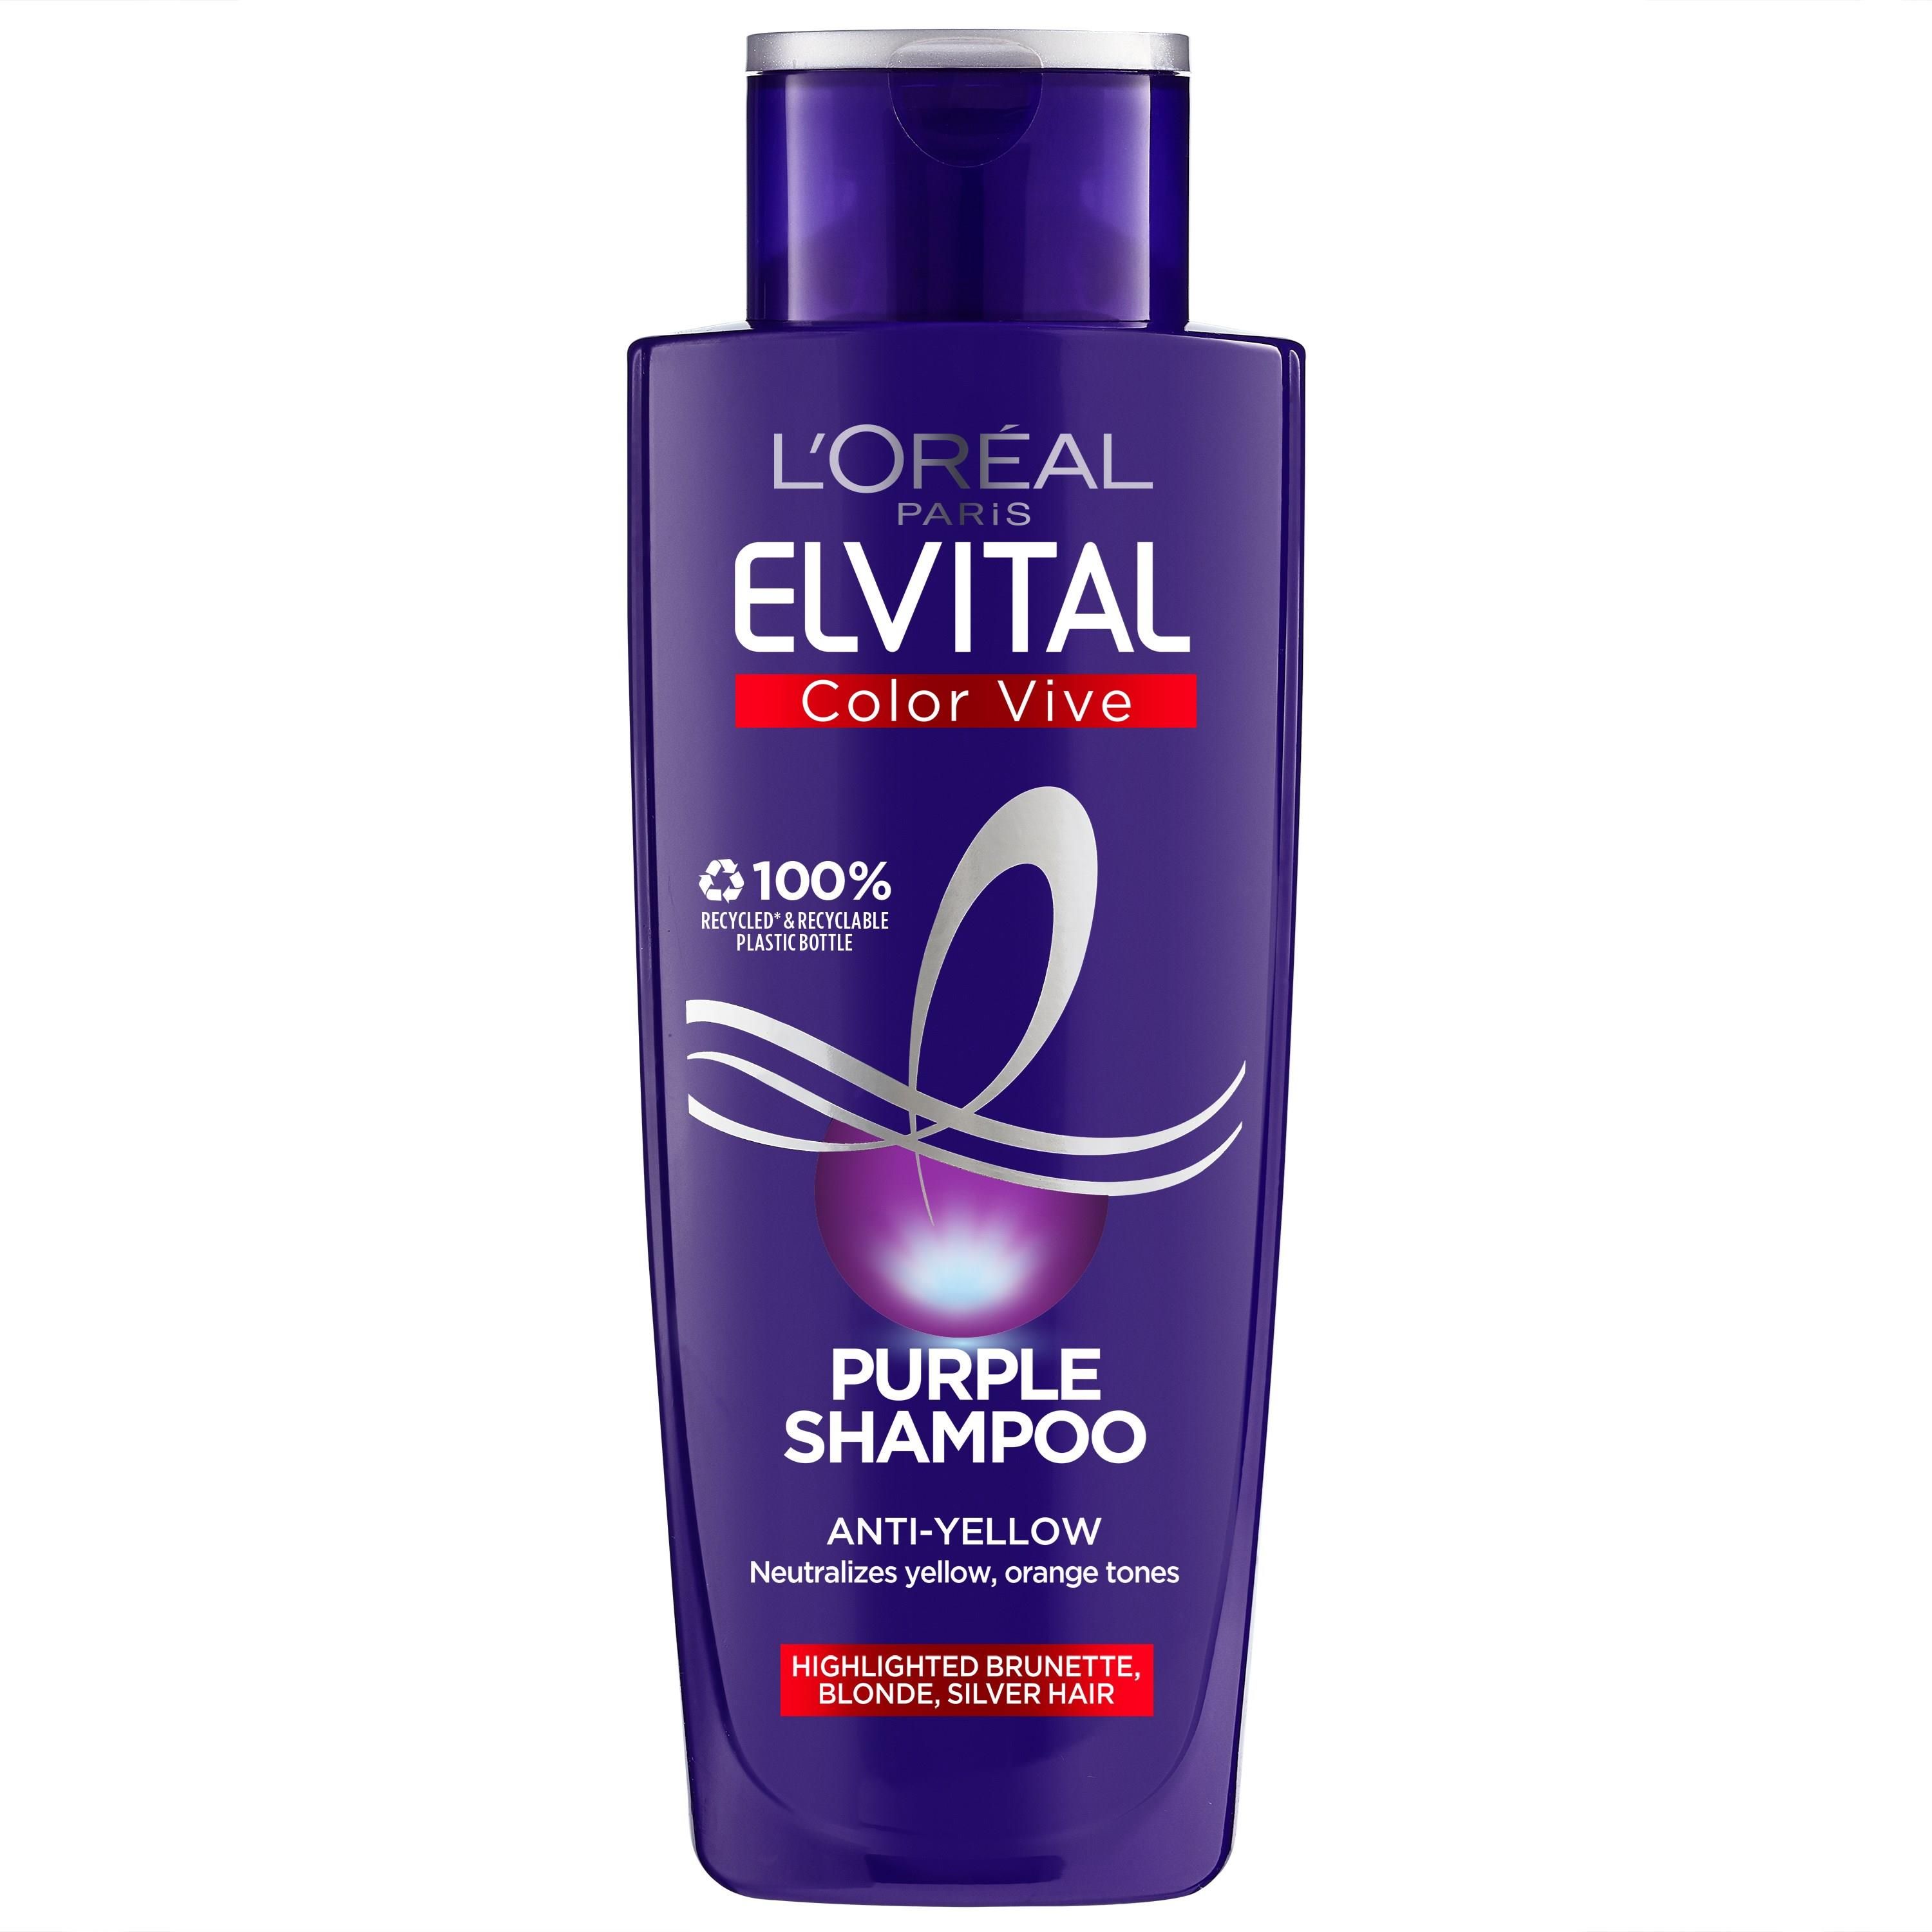 wlosy po fioletowy szampon loreal